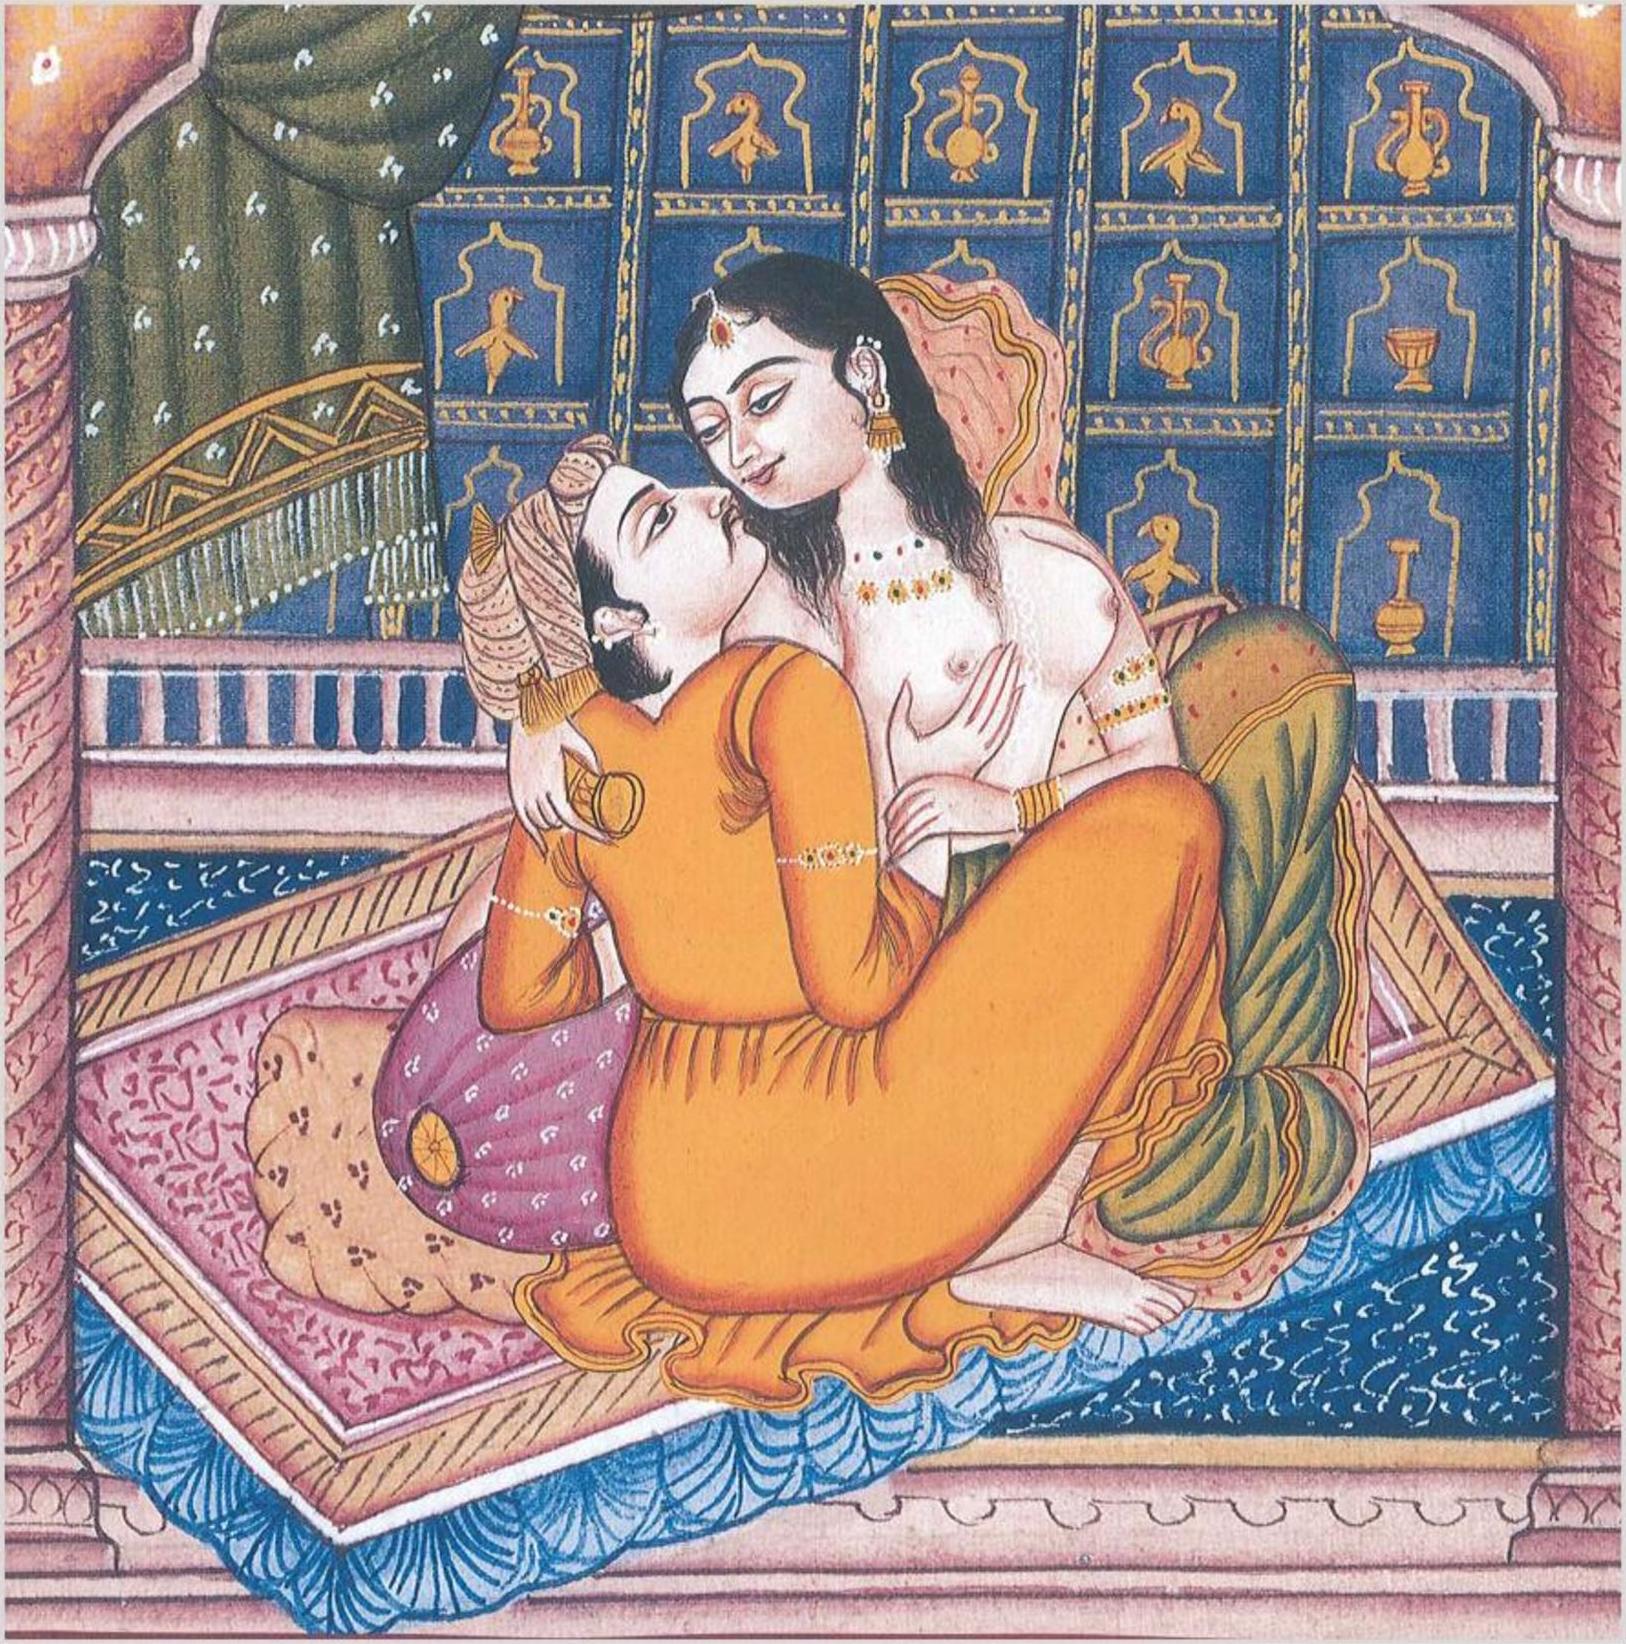 Kama Sutra: Tο σεξ ως βαθιά εξερεύνηση απαράμιλλης απόλαυσης [vid]